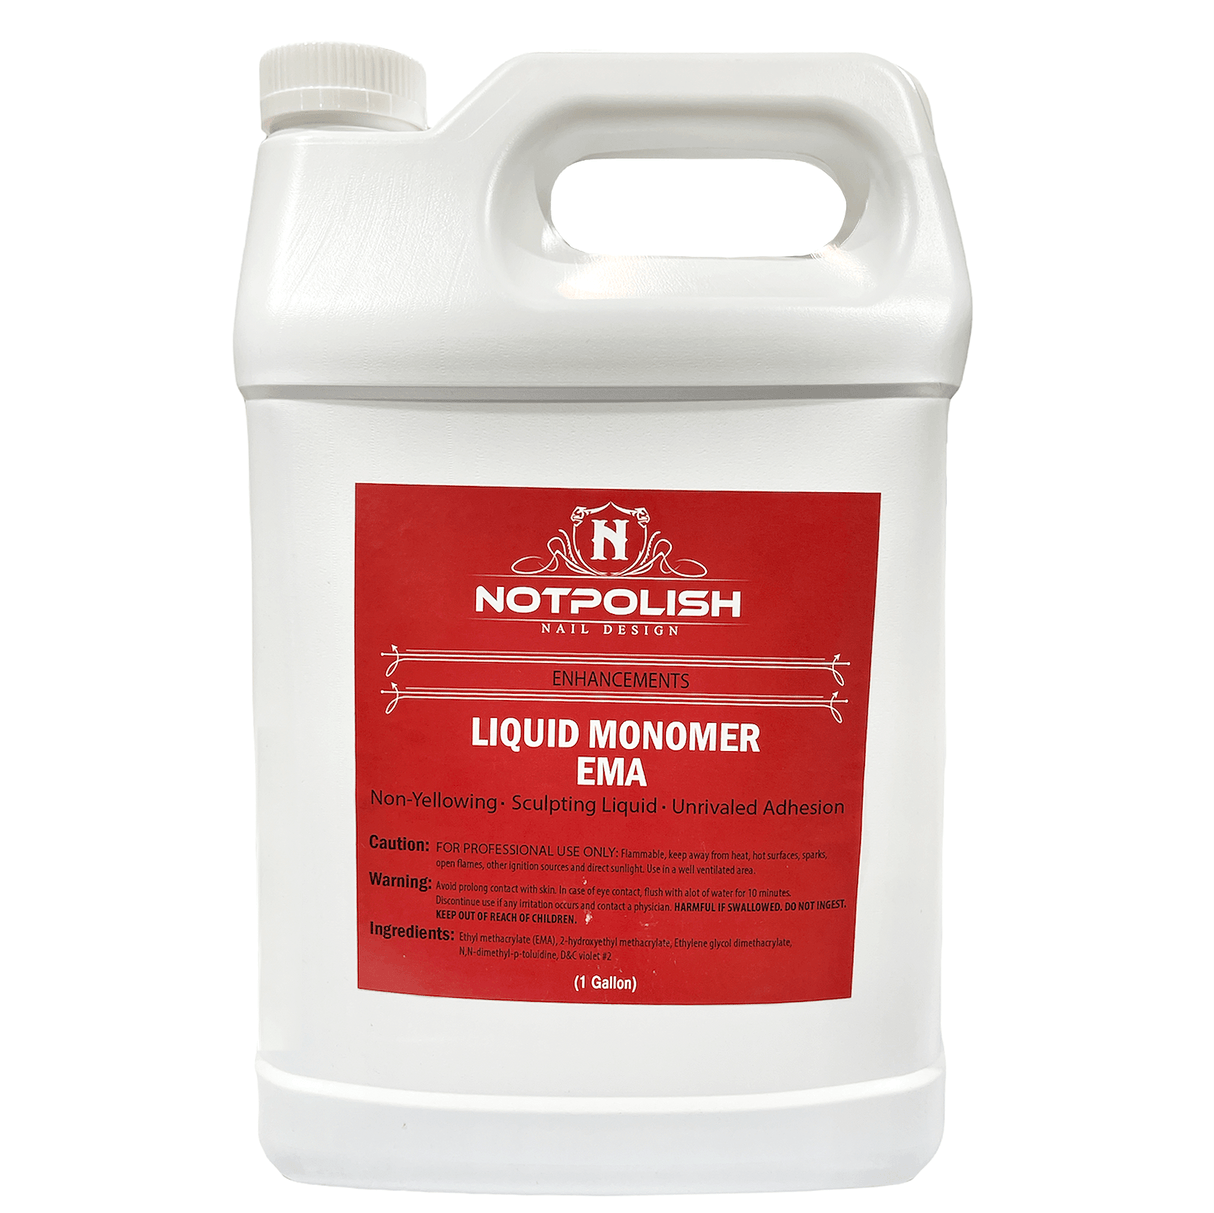 NOTPOLISH Liquid Monomer EMA LOW ODOR